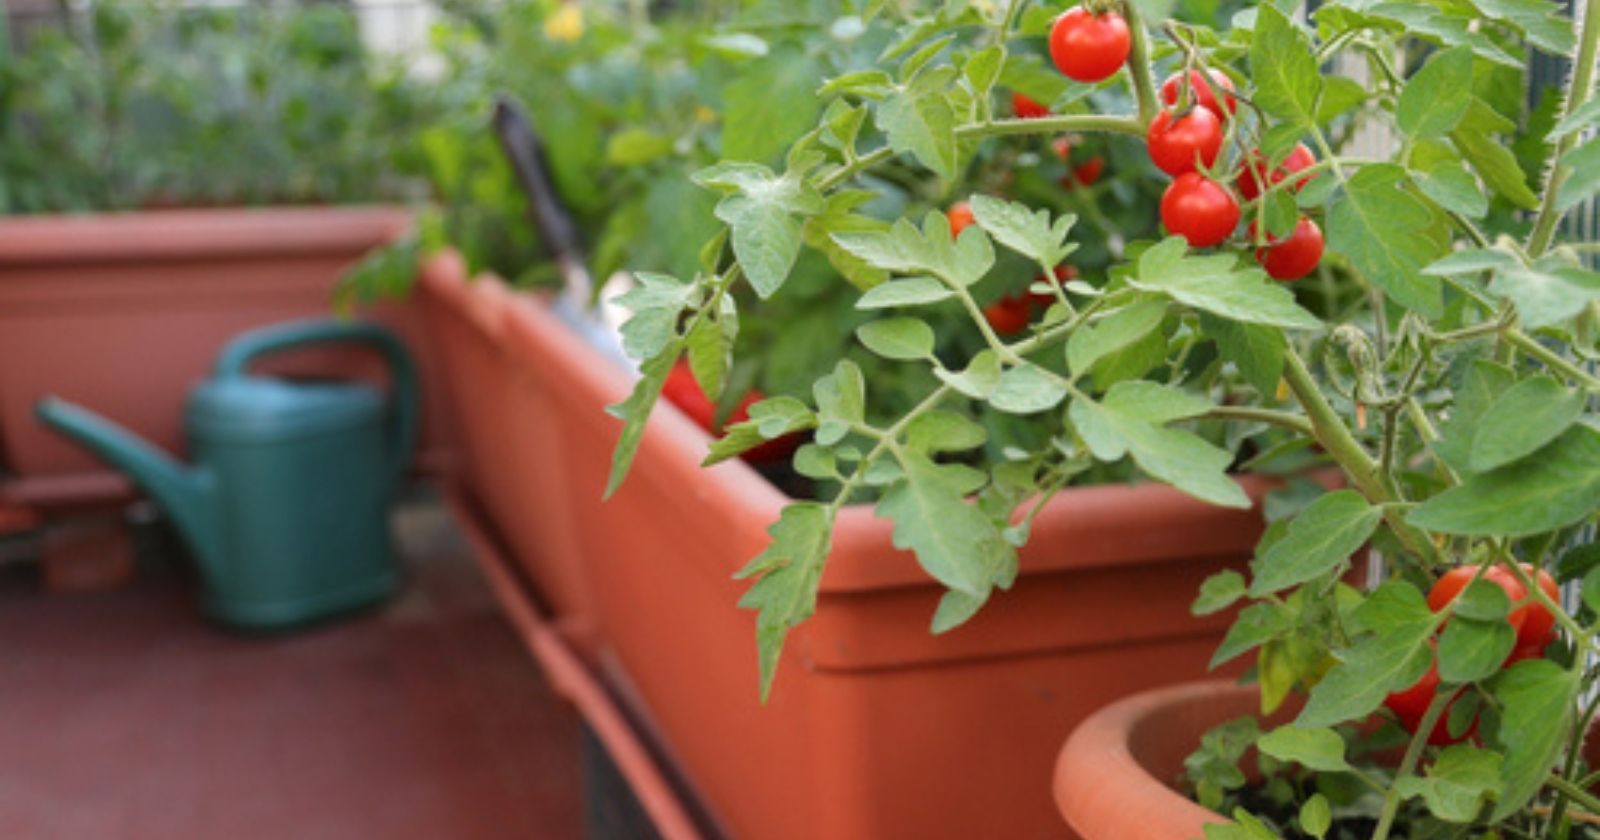 Balcony vegetable garden: how to grow tomatoes in pots?